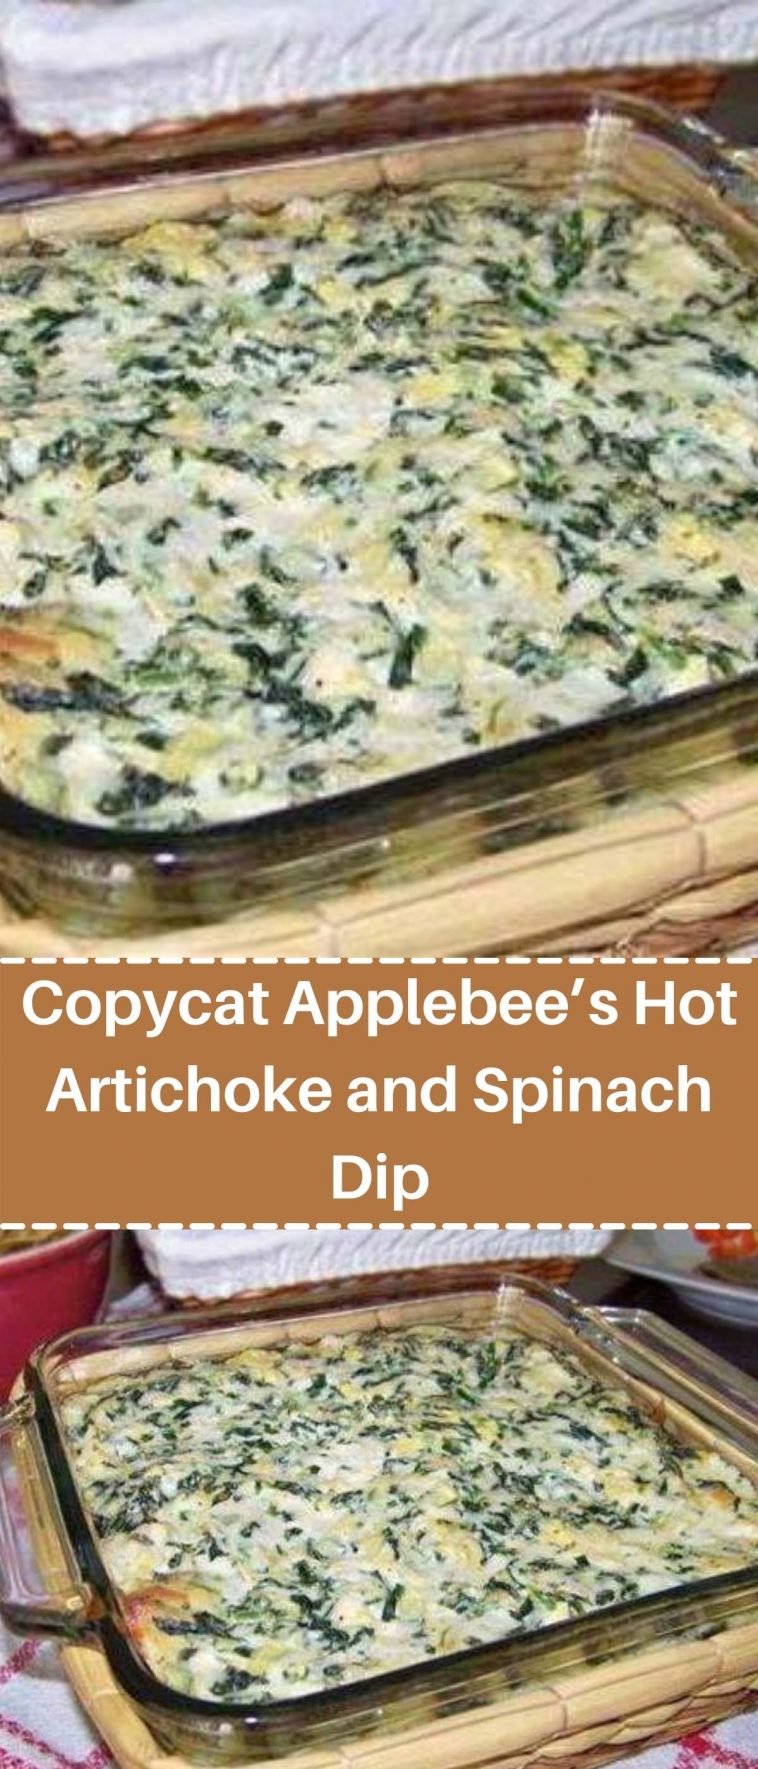 Copycat Applebee’s Hot Artichoke and Spinach Dip